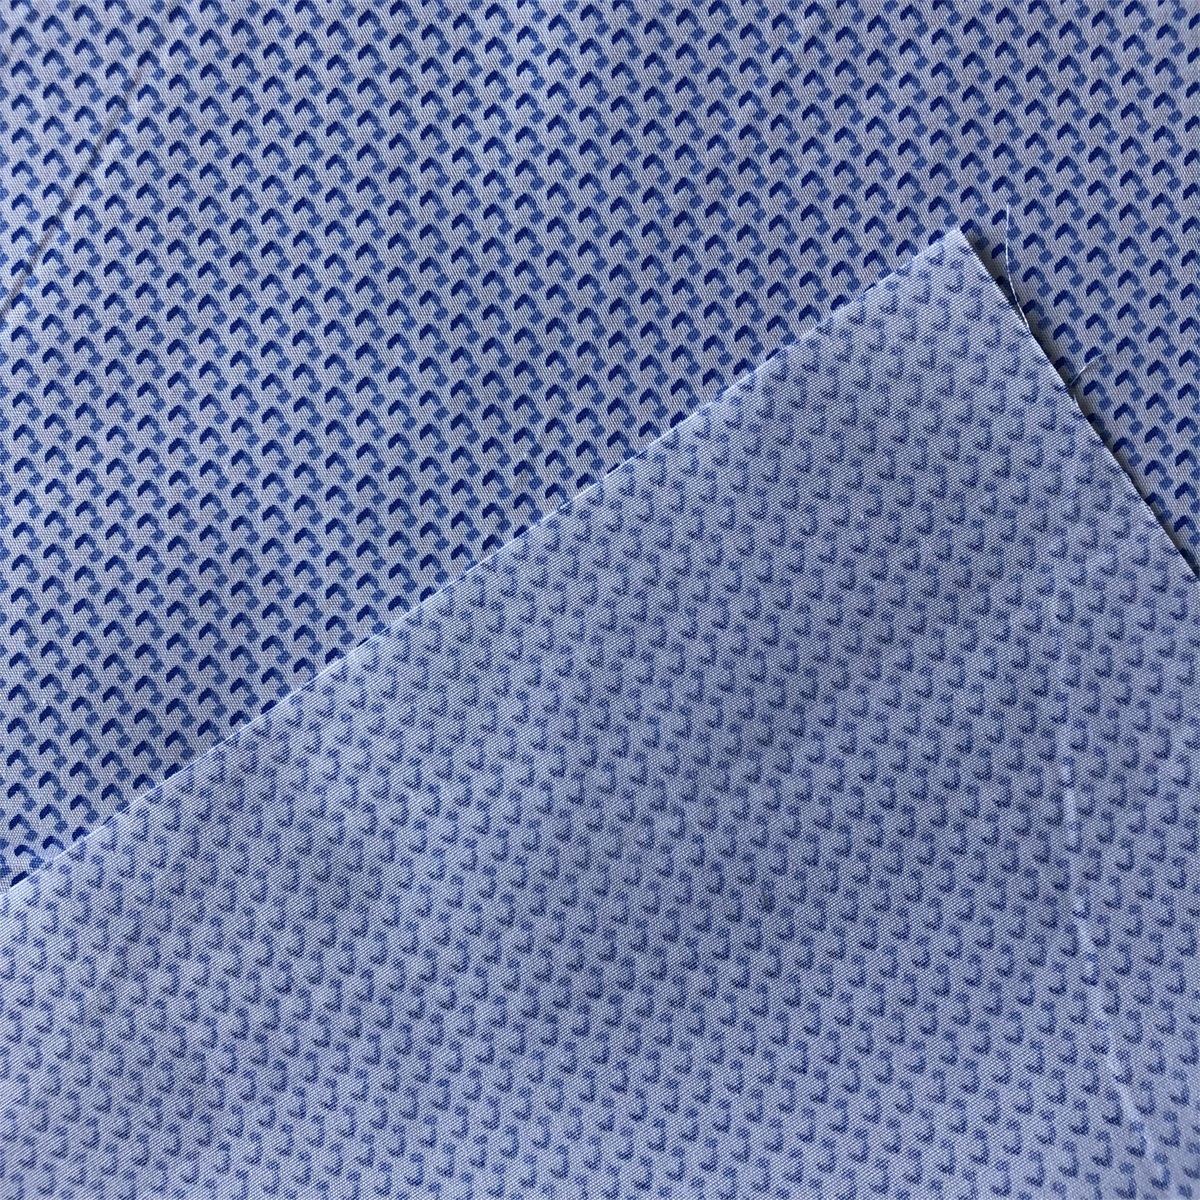 New Sun-rising Textile Cotton fabric 50S compact yarn soft for men's shirts 100% cotton poplin printed shirts woven fabric